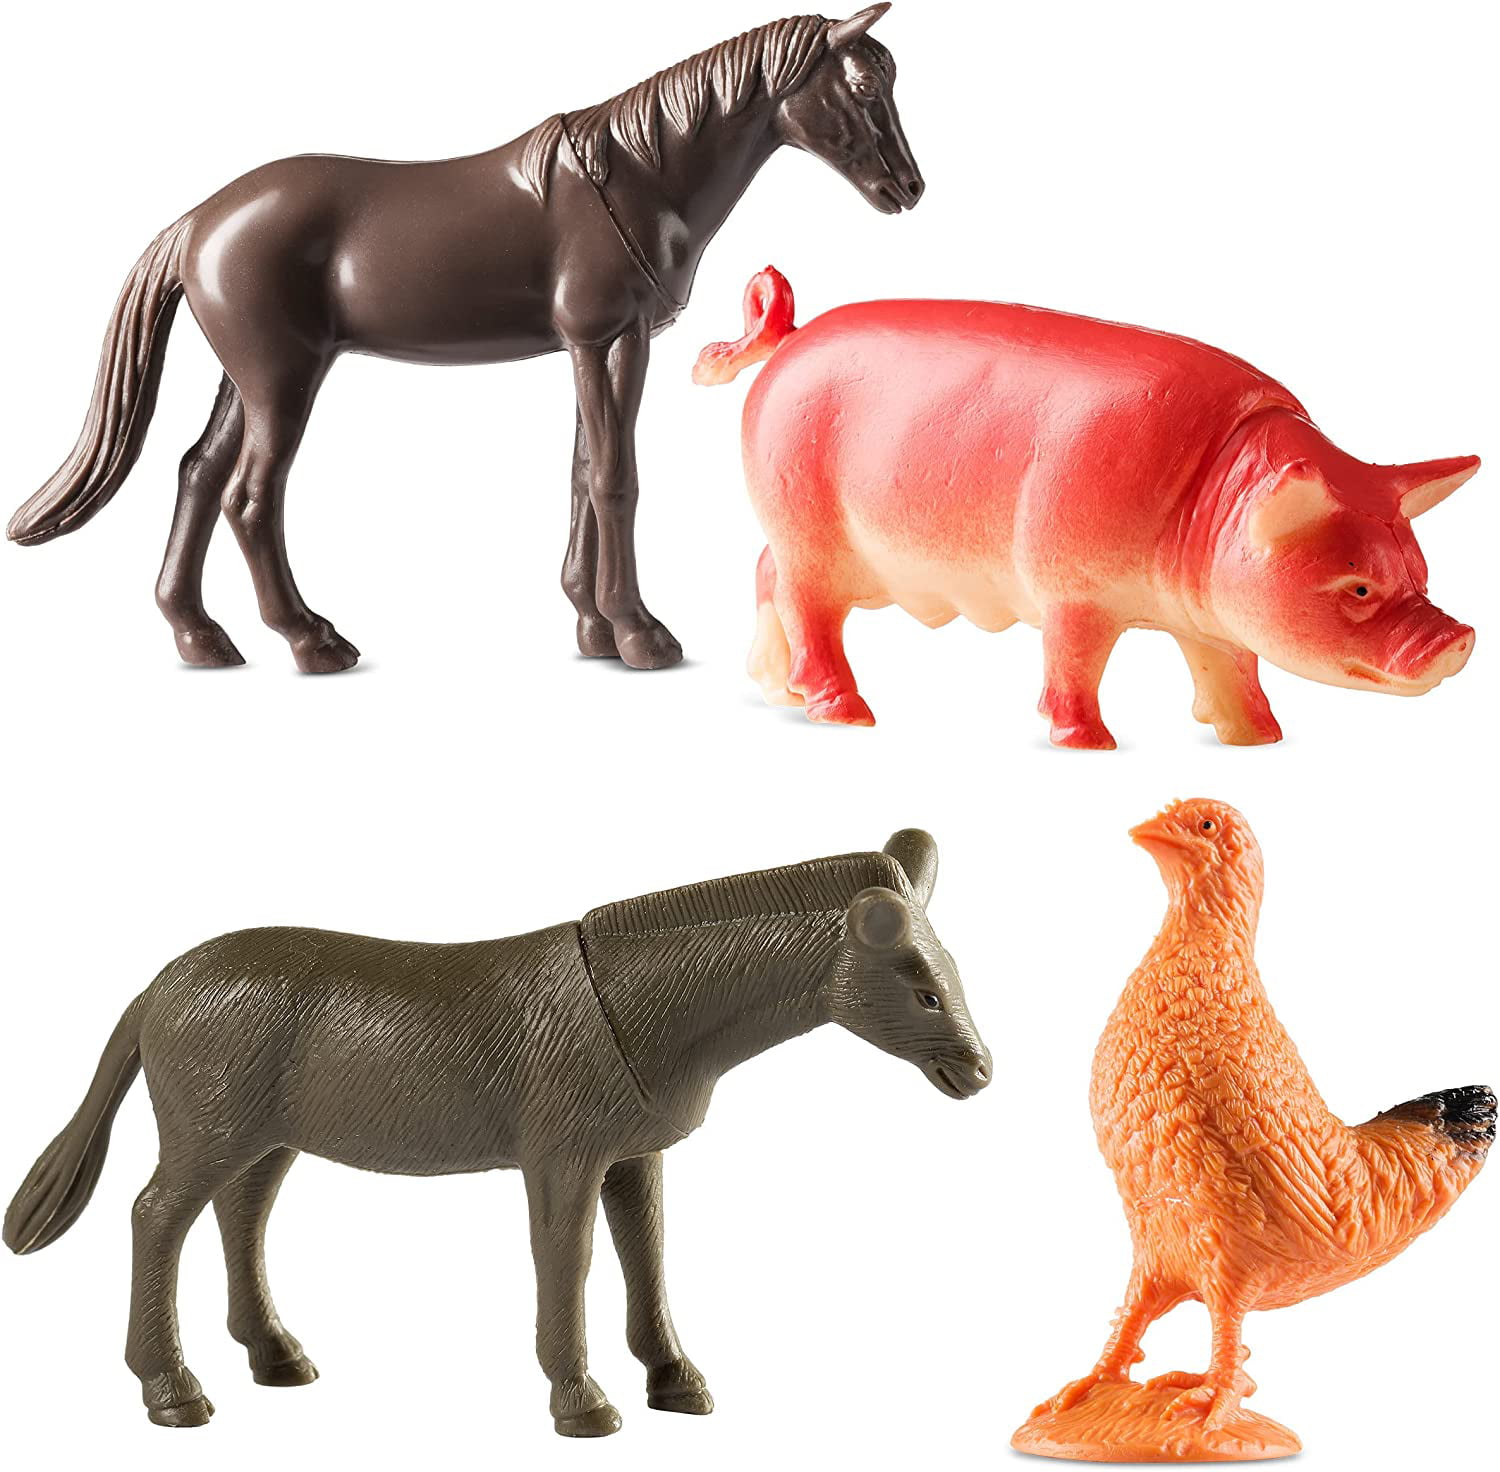 Aydinids 10 Pcs Miniature Farm Animal Figurines Realistic Barn